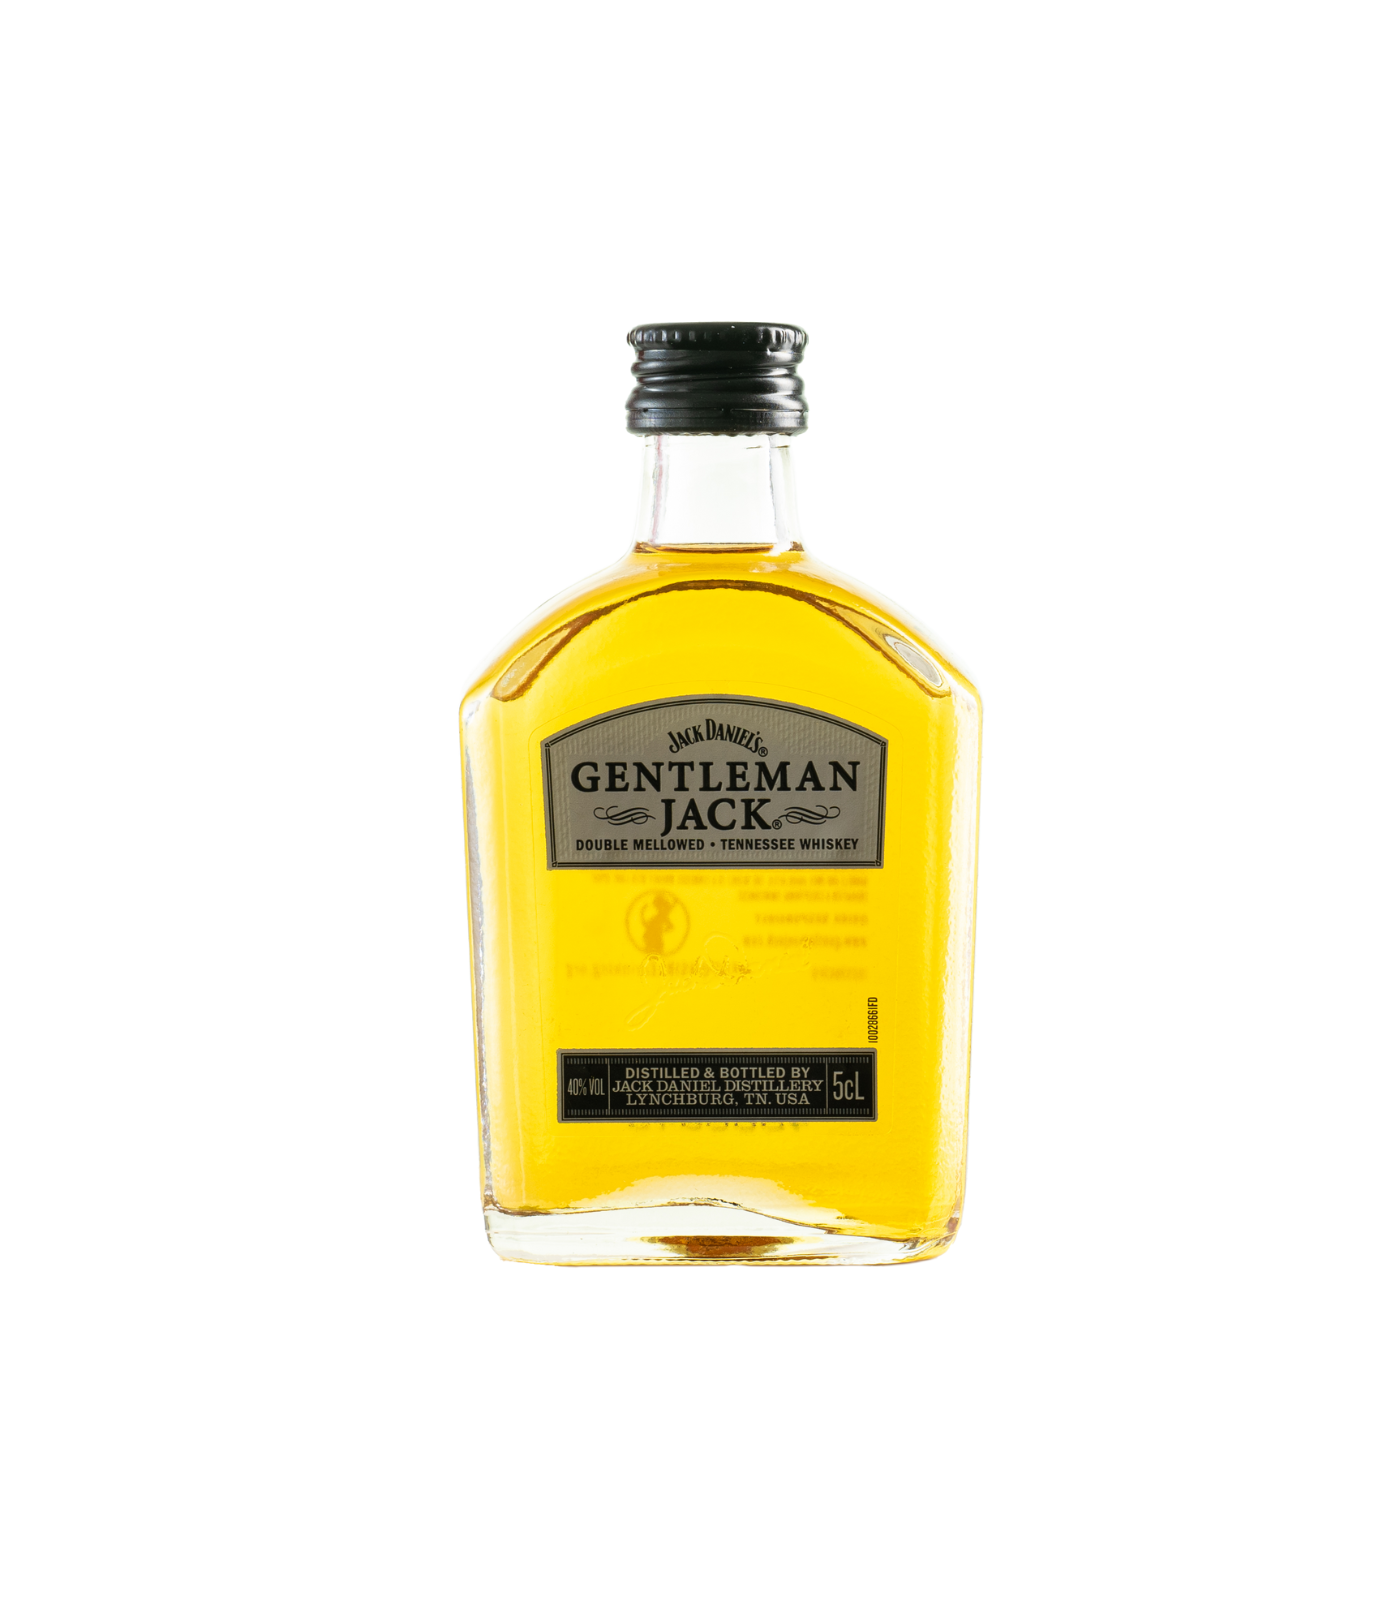 Daniel\'s 50ml – Jack Gentleman Liquor Jack Lib Whisky Philippines